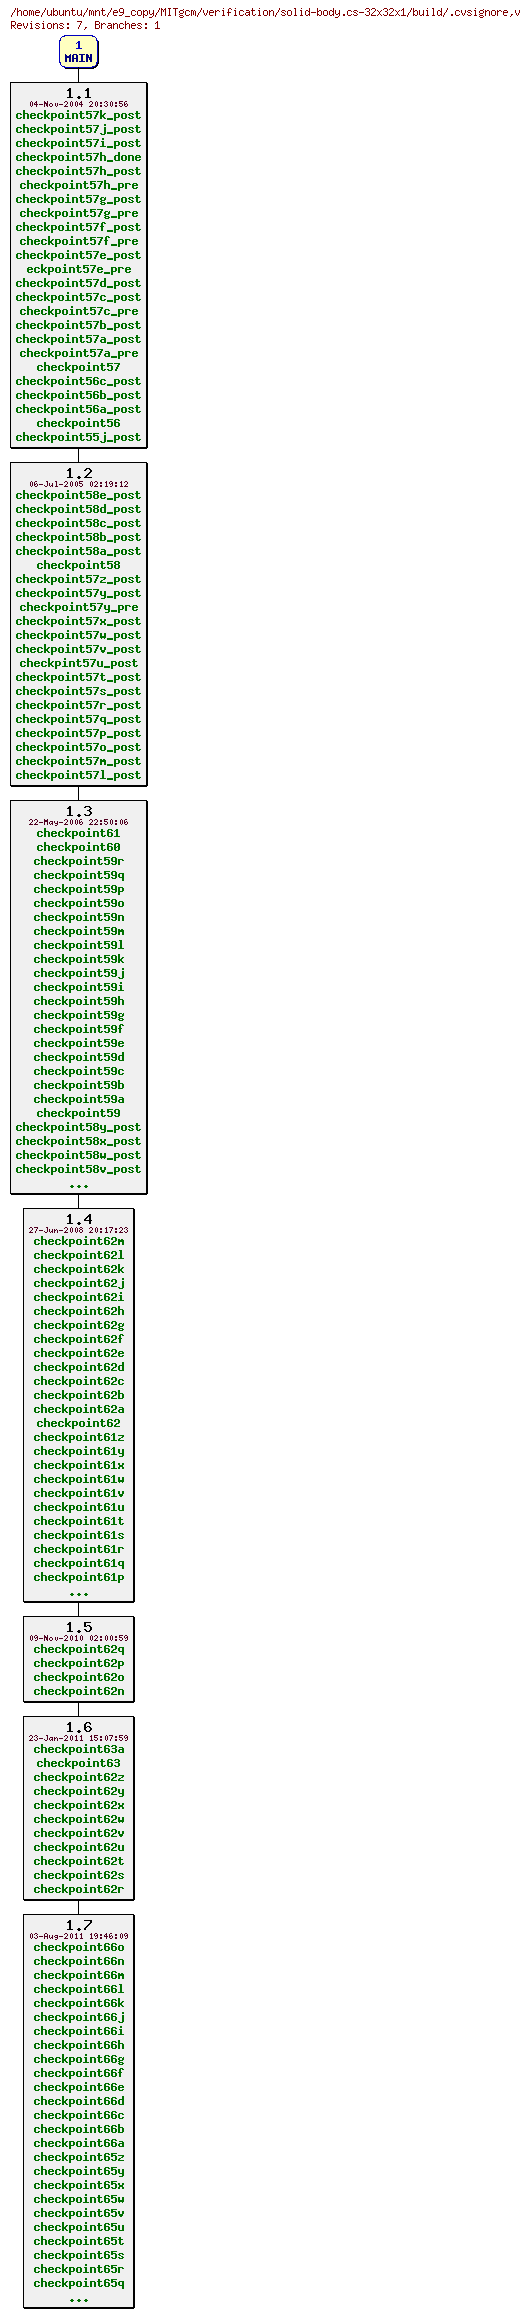 Revisions of MITgcm/verification/solid-body.cs-32x32x1/build/.cvsignore